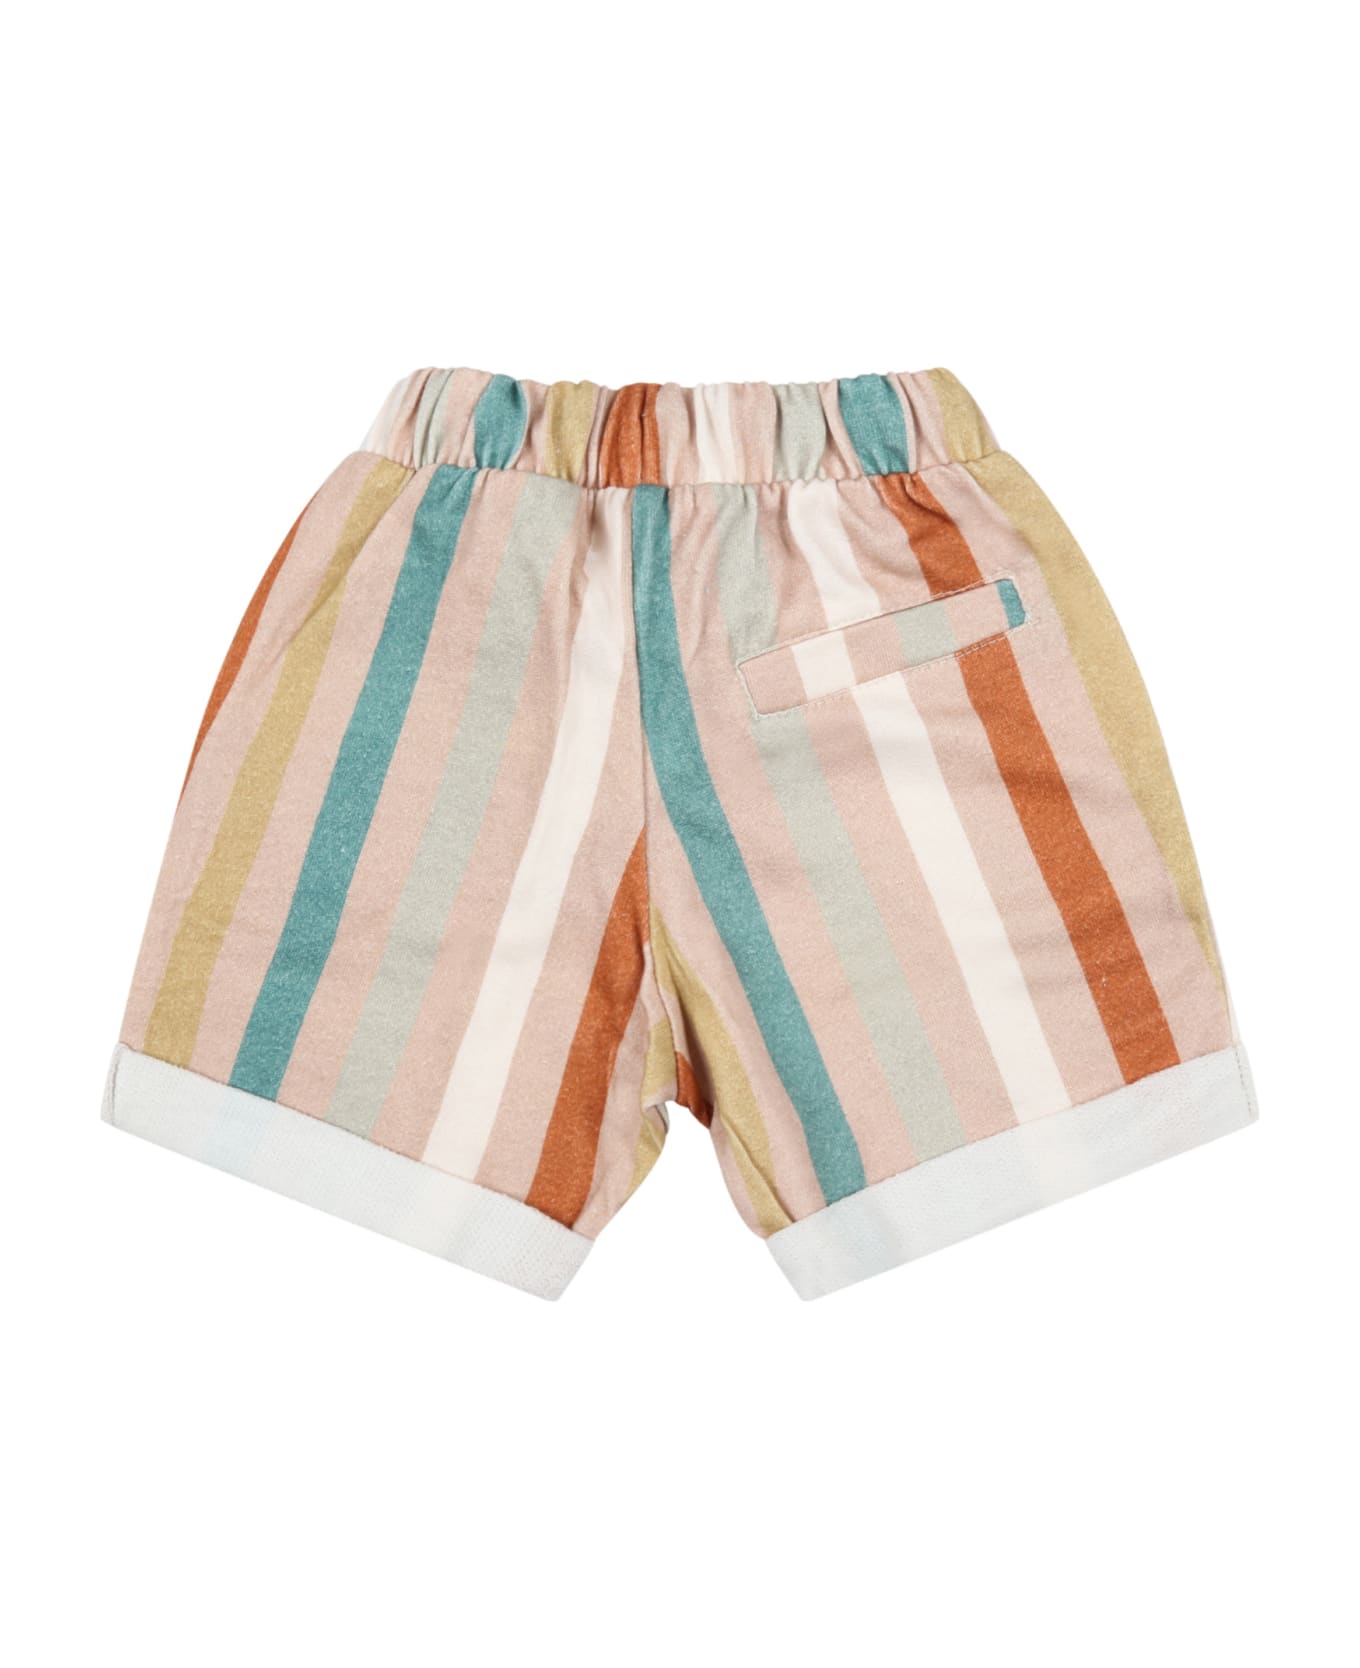 Coco Au Lait Multicolor Shorts For Baby Girl - Multicolor